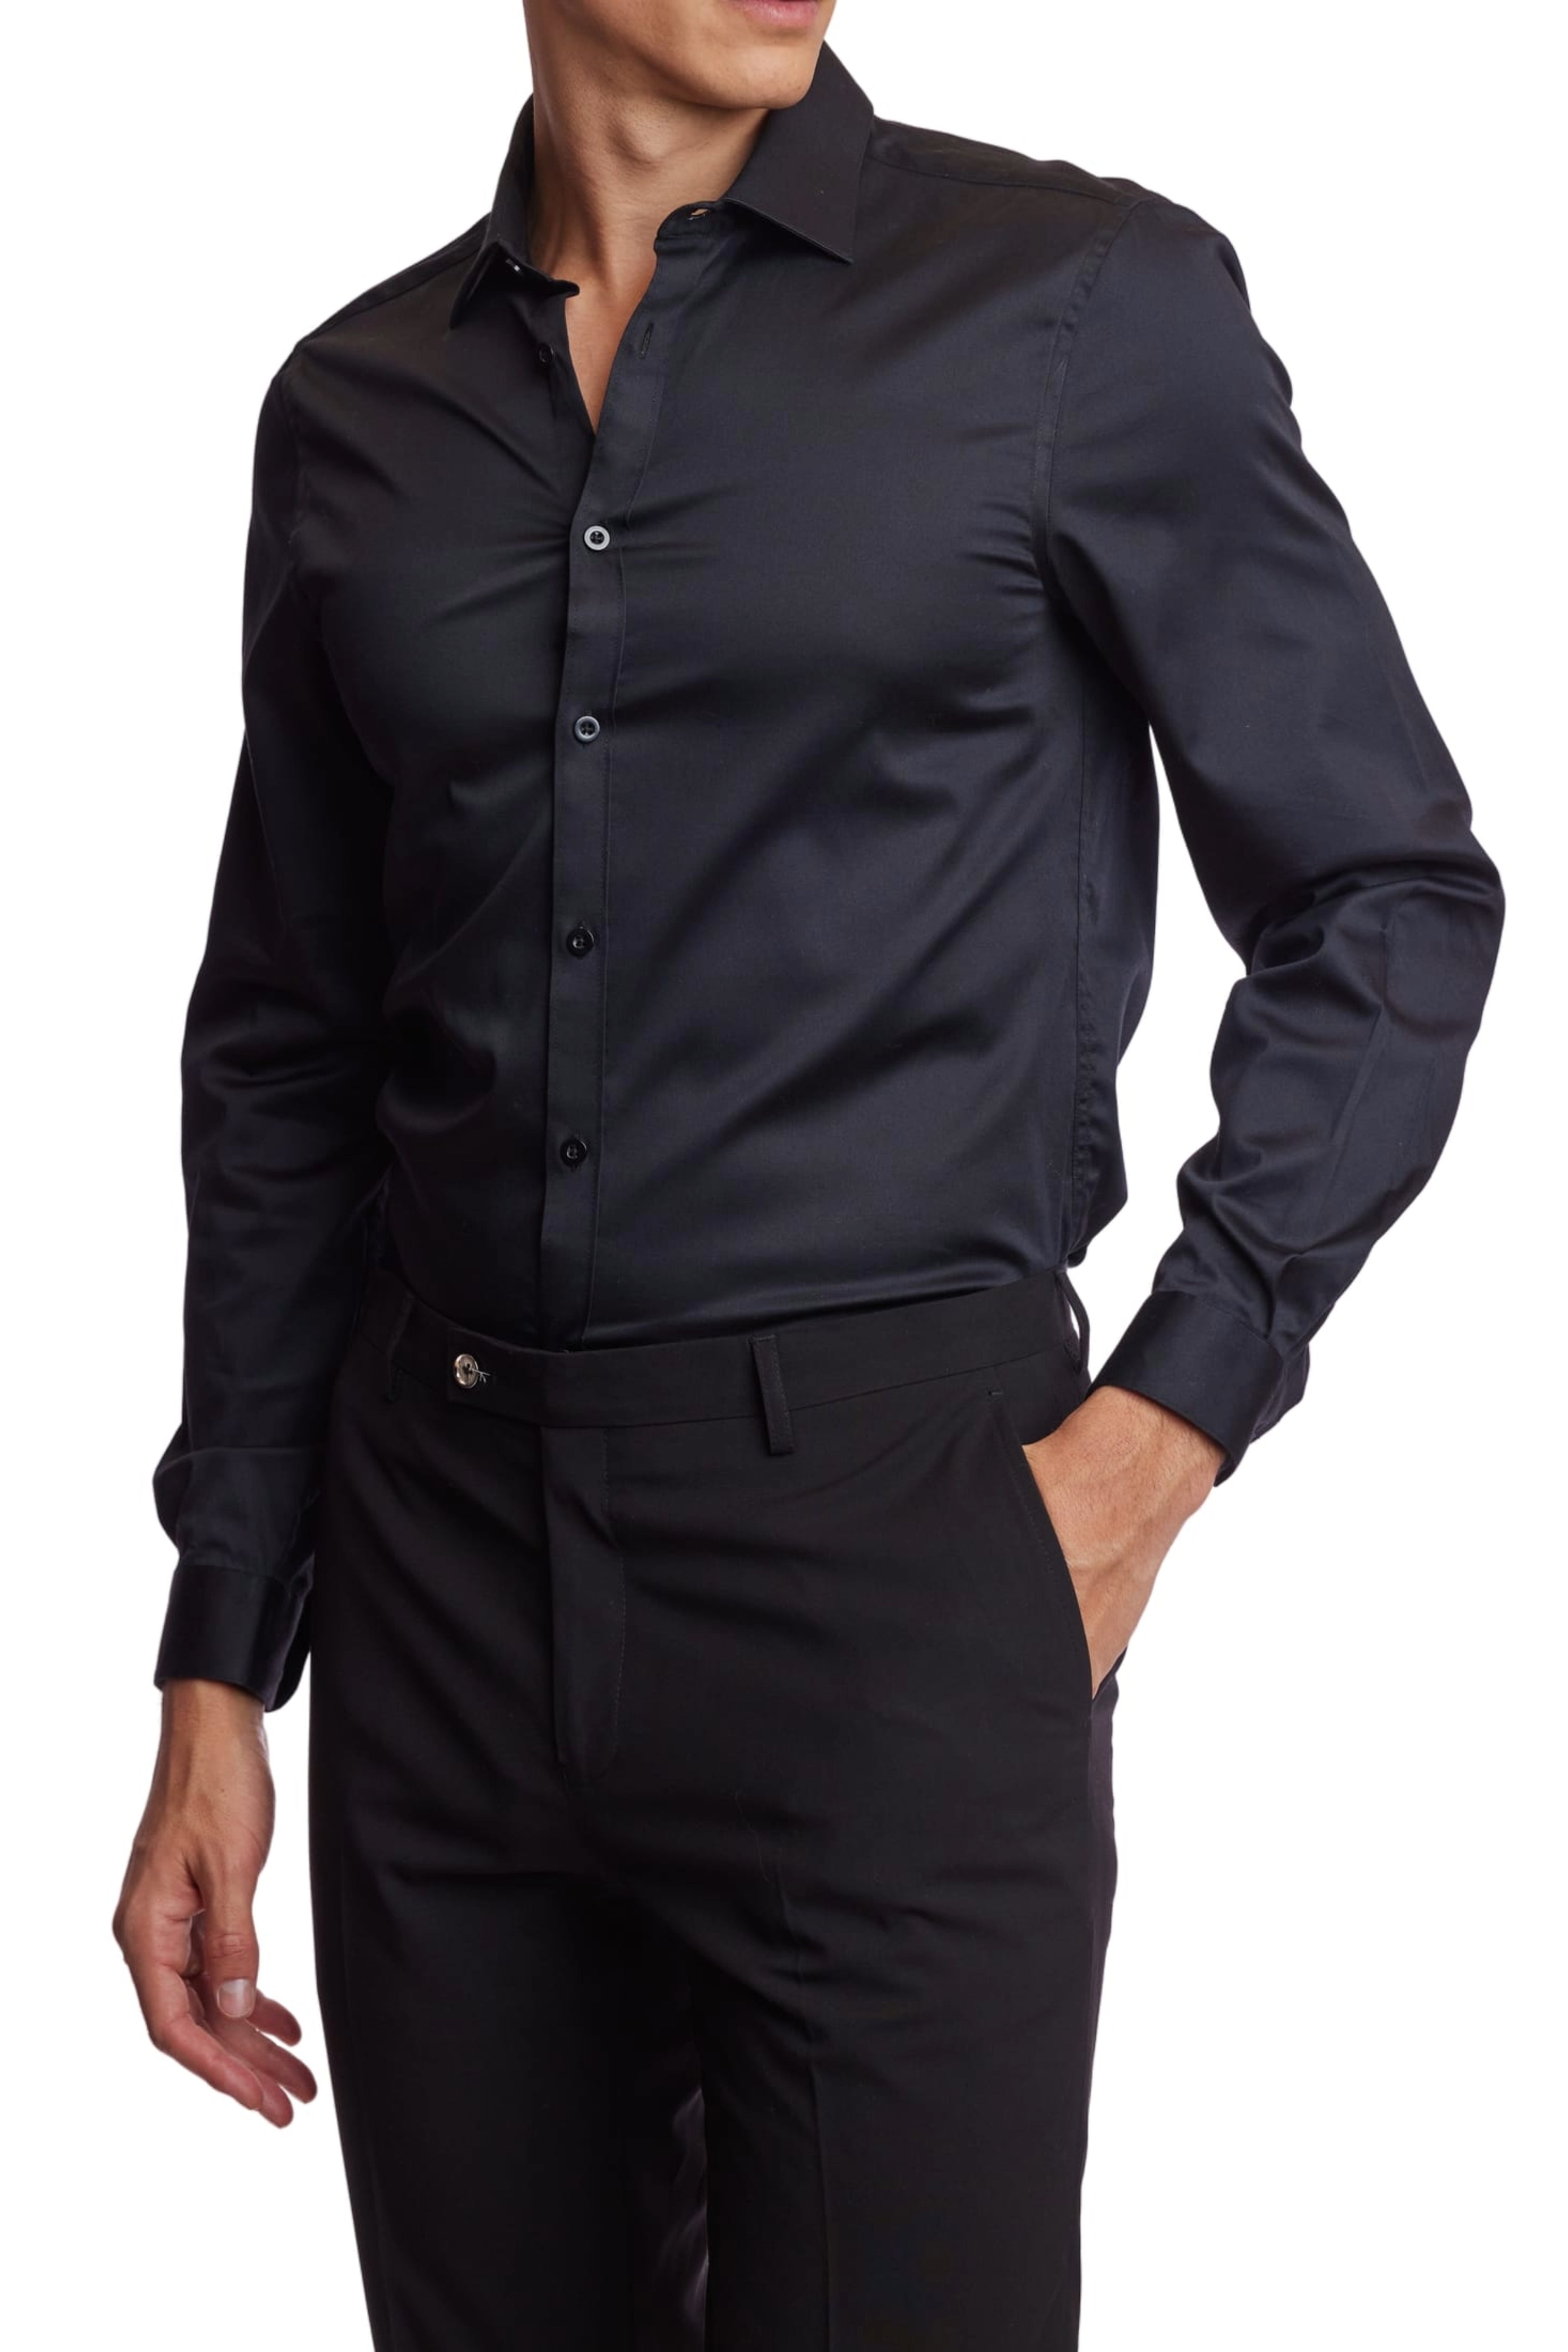 Samuel Spread Collar Shirt - Coal Black